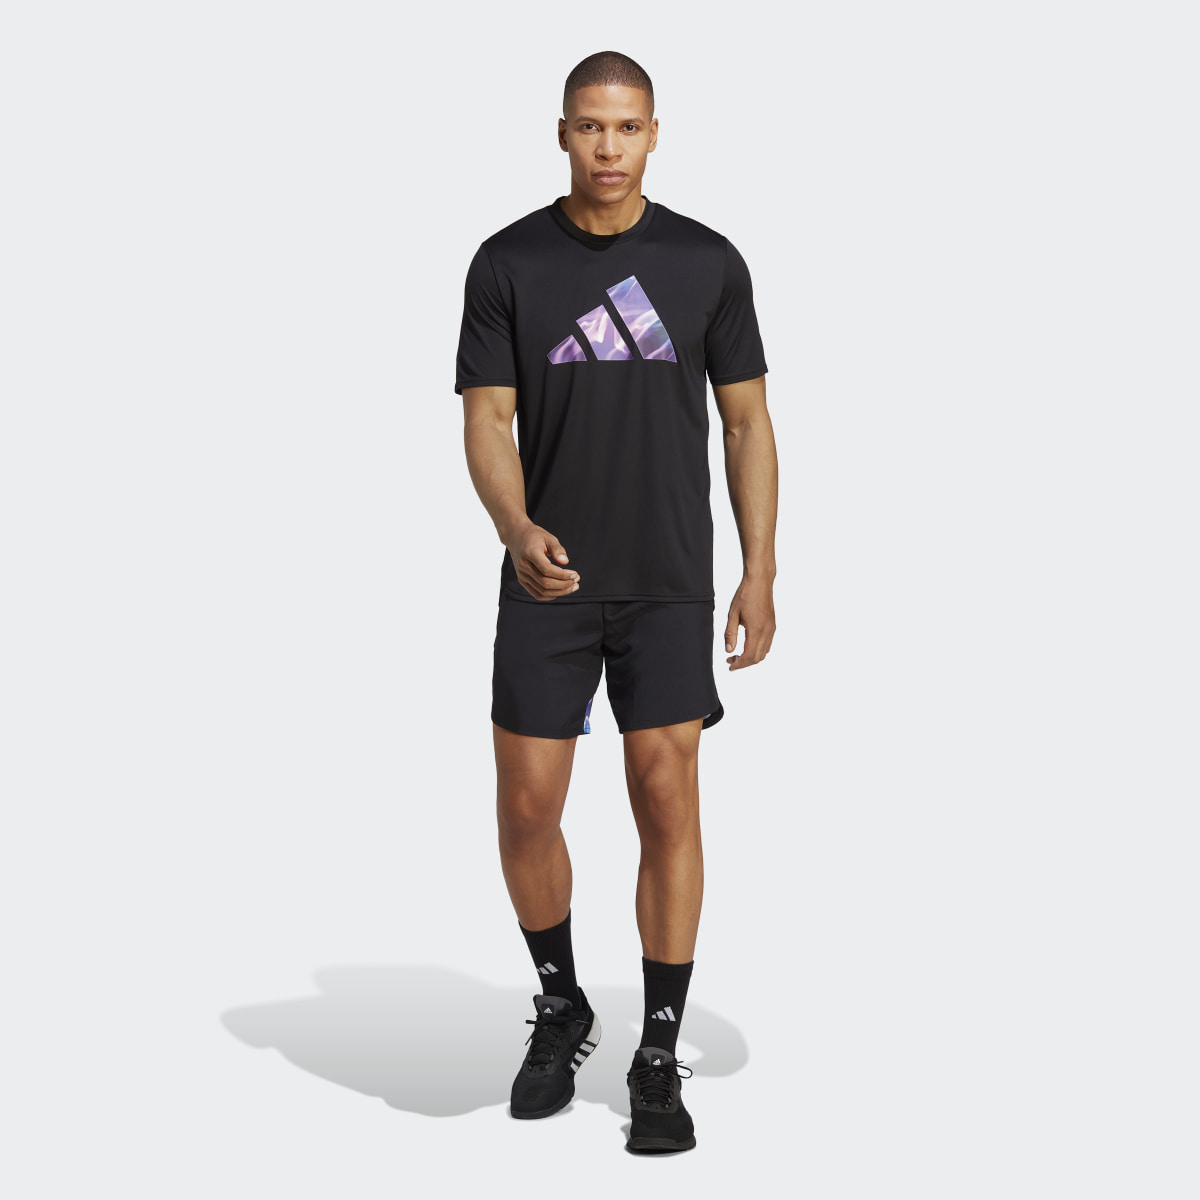 Adidas Designed for Movement HIIT Training Shorts. 5